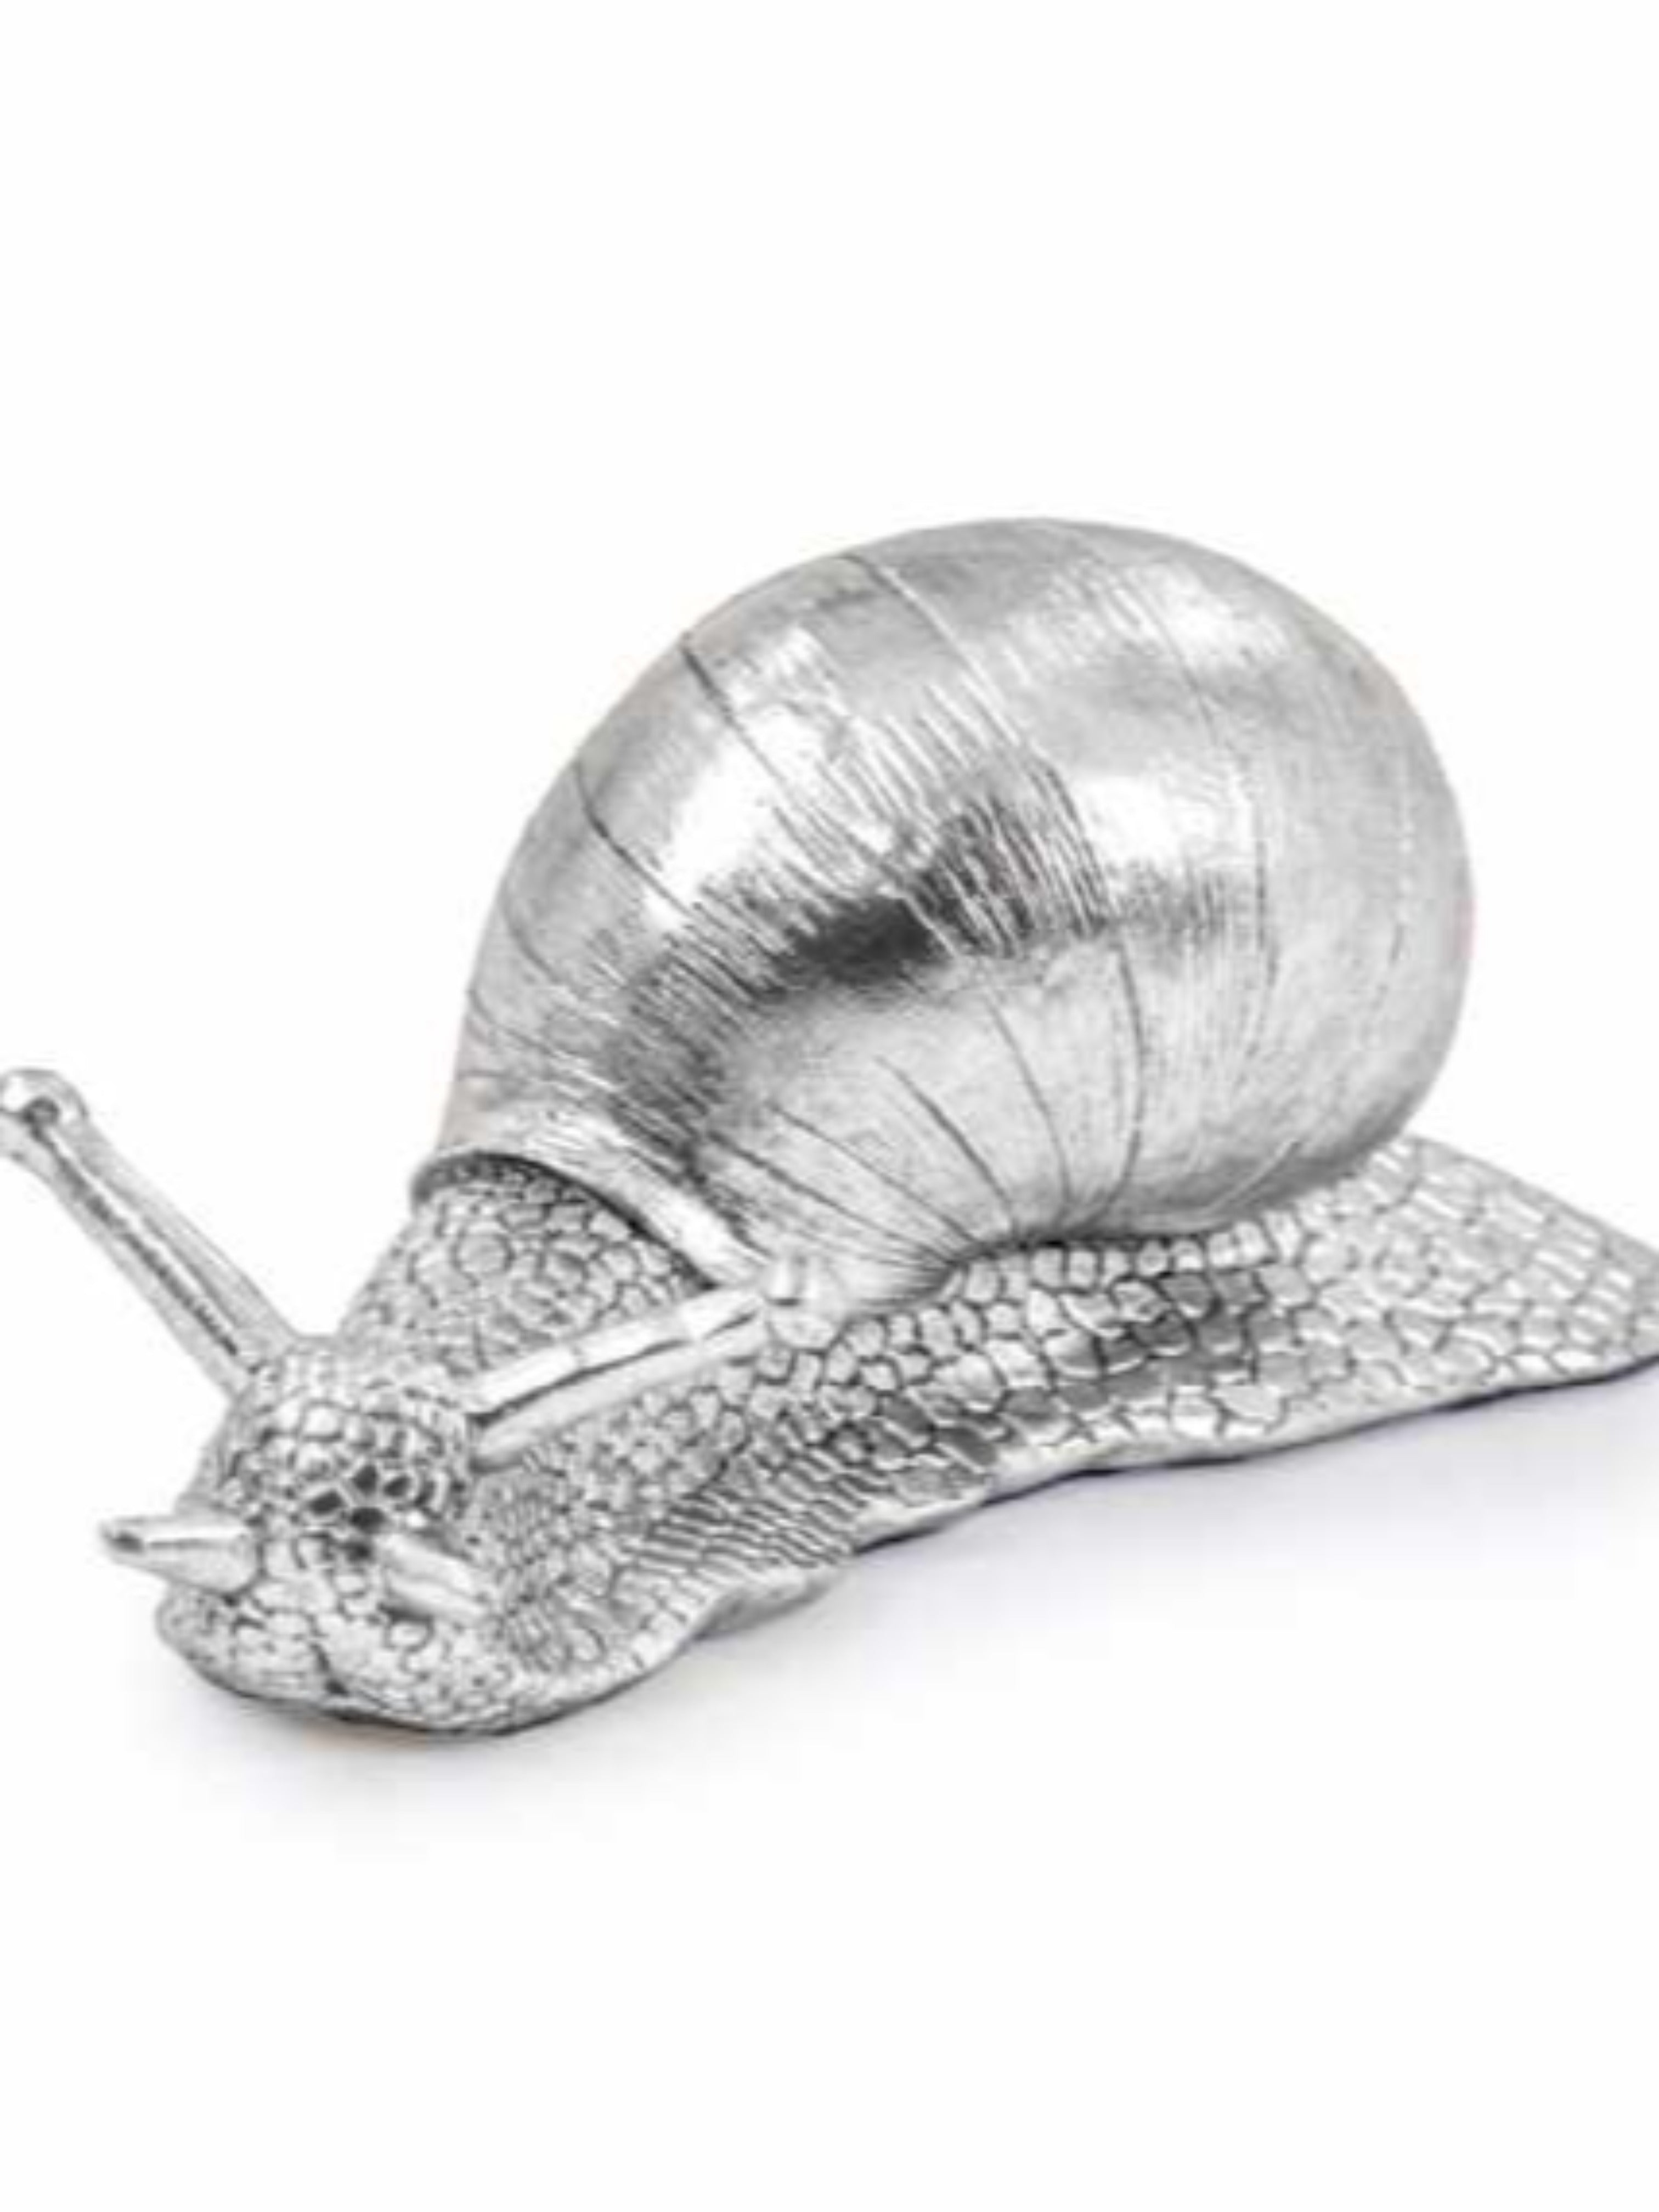 Large Silver Snail Ornament